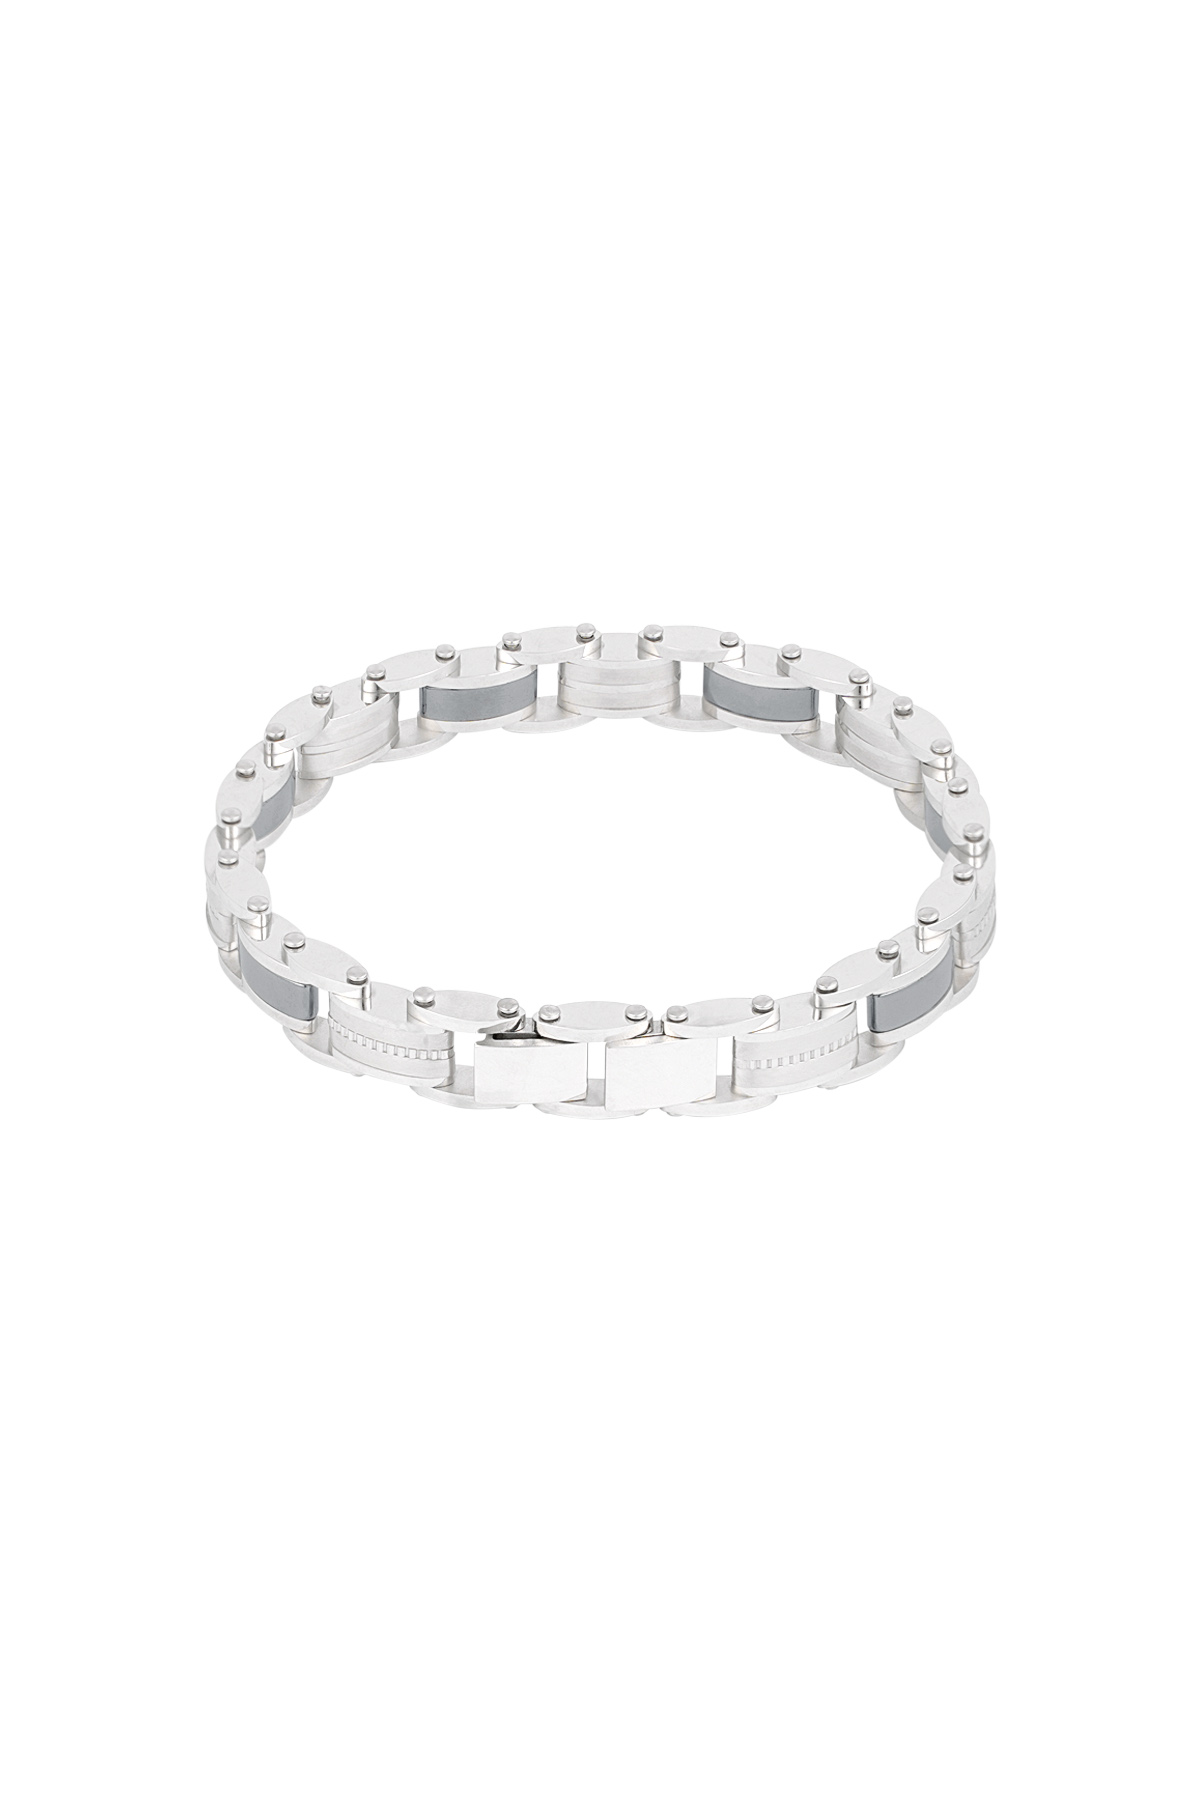 Linked steel men's bracelet - silver-1cm h5 